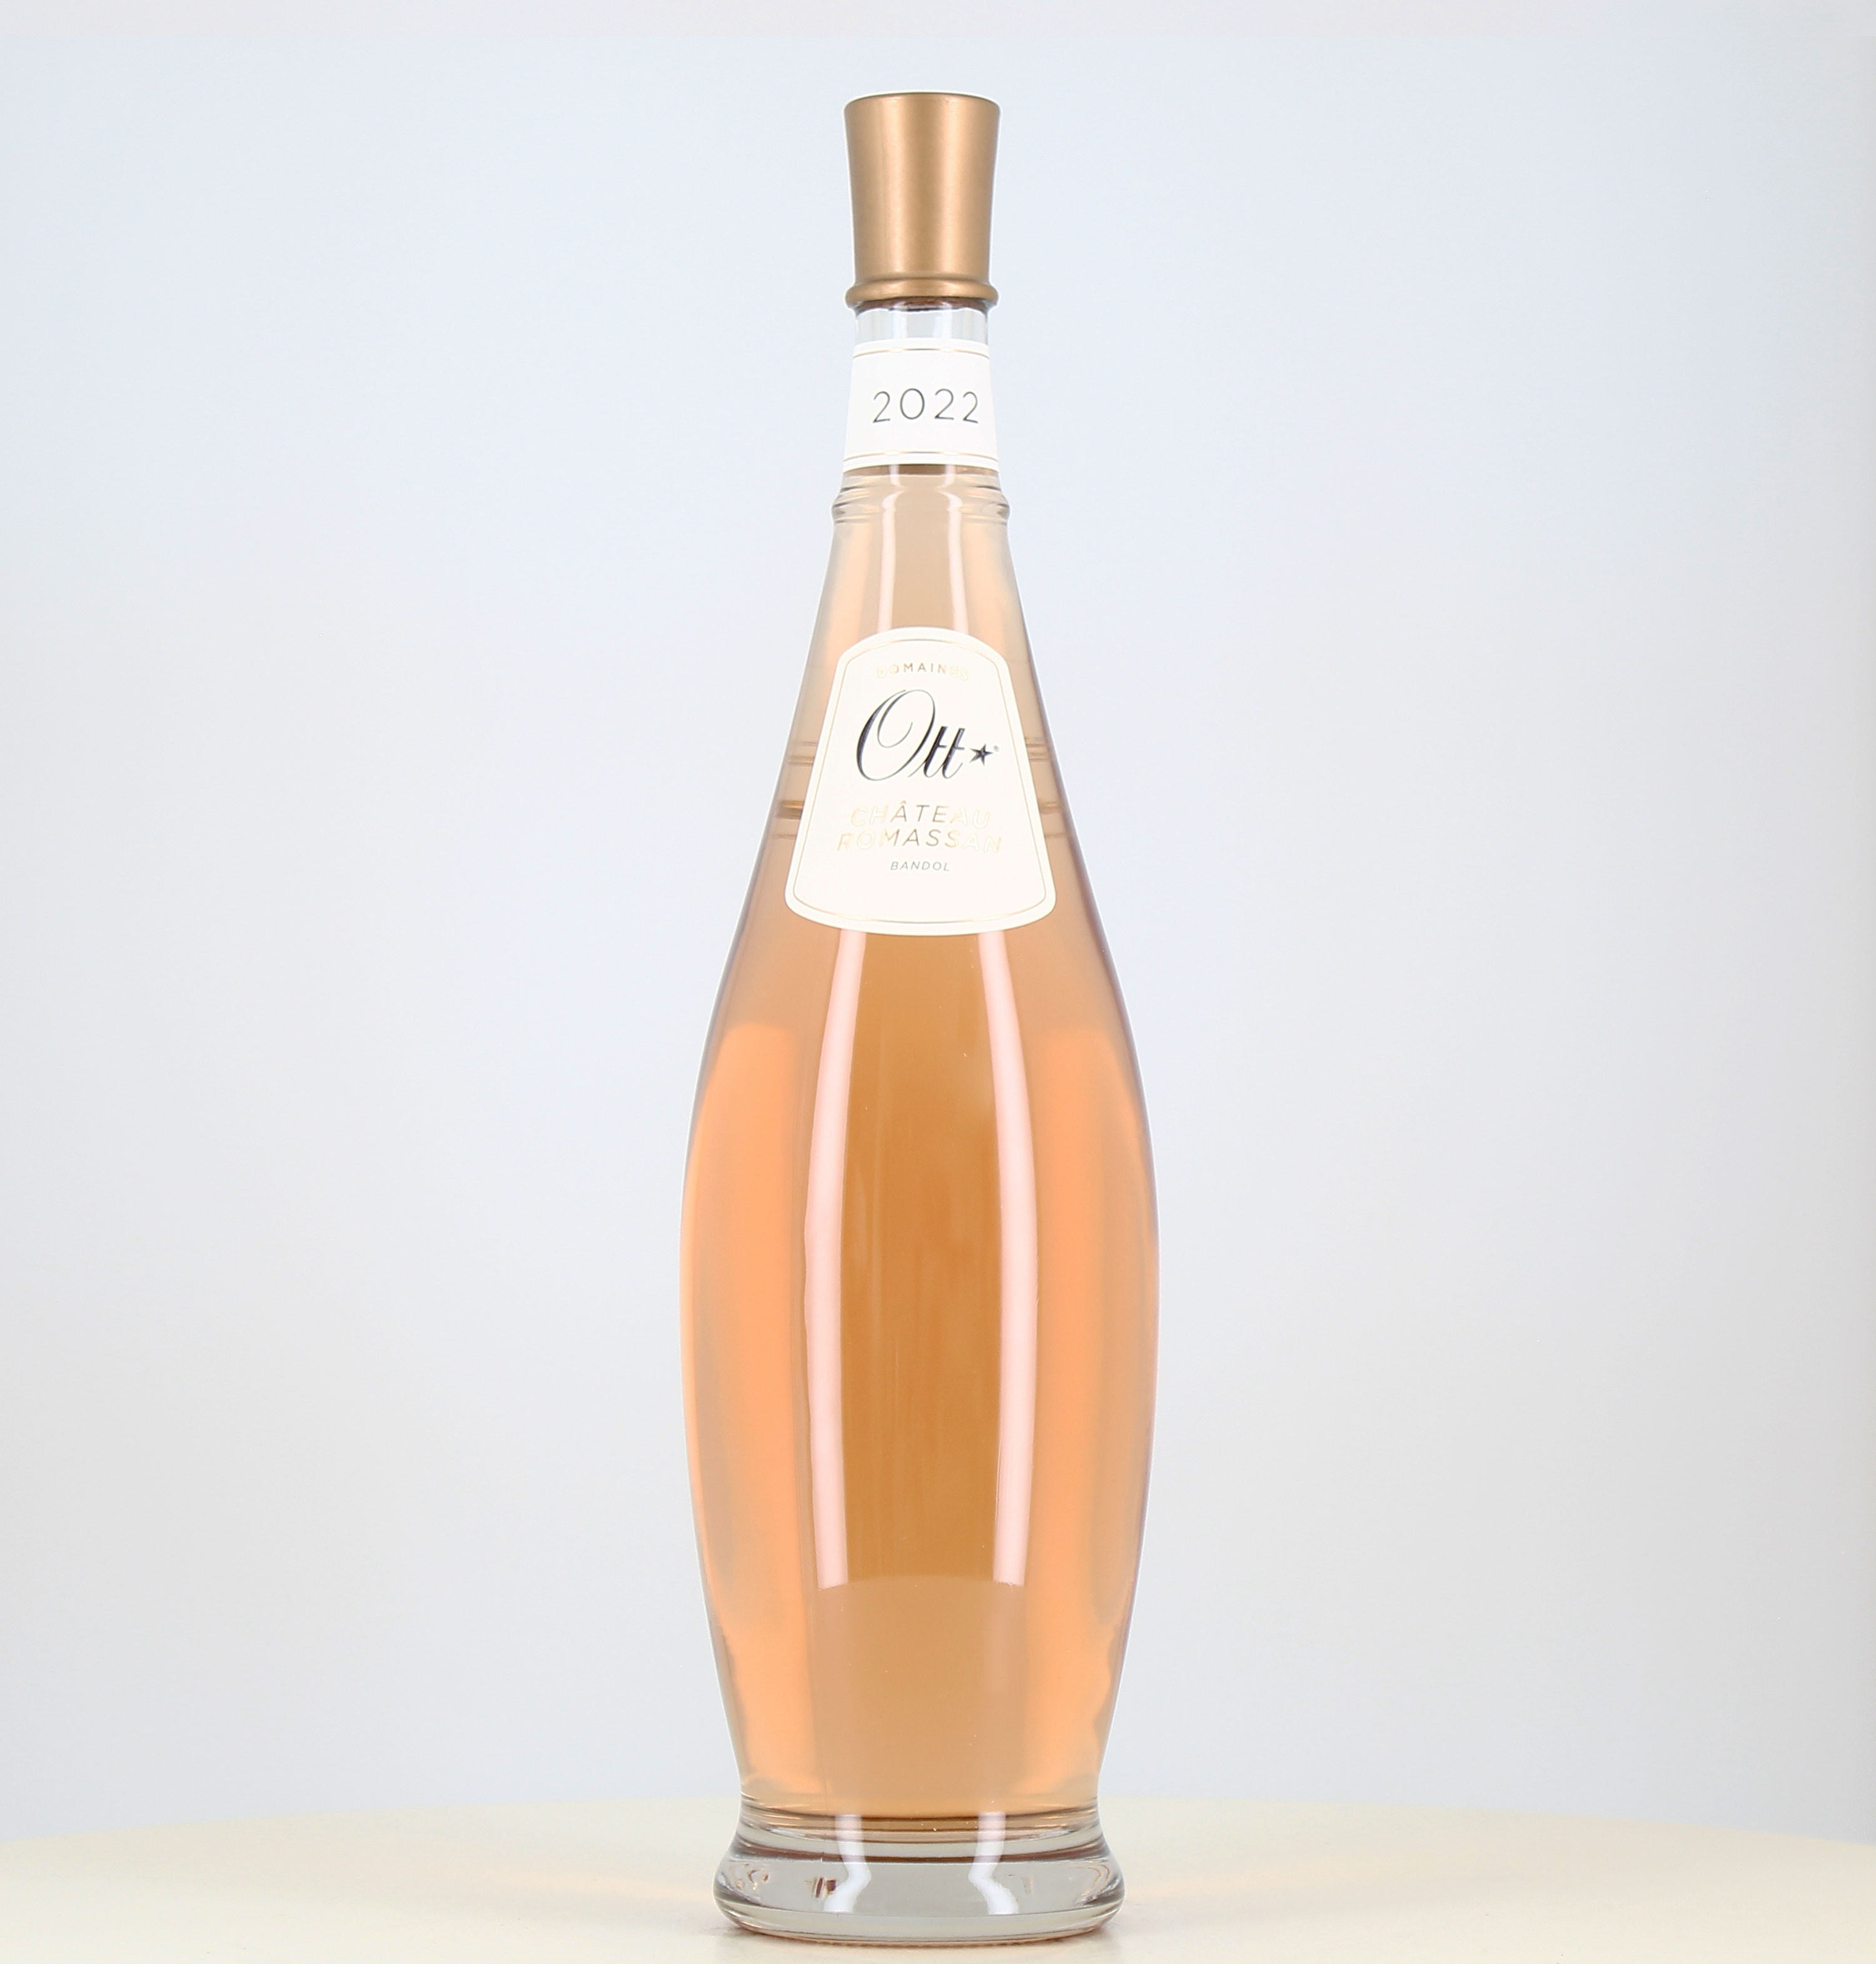 Jéroboam rosé wine Ott Bandol Château Romassan 2022 